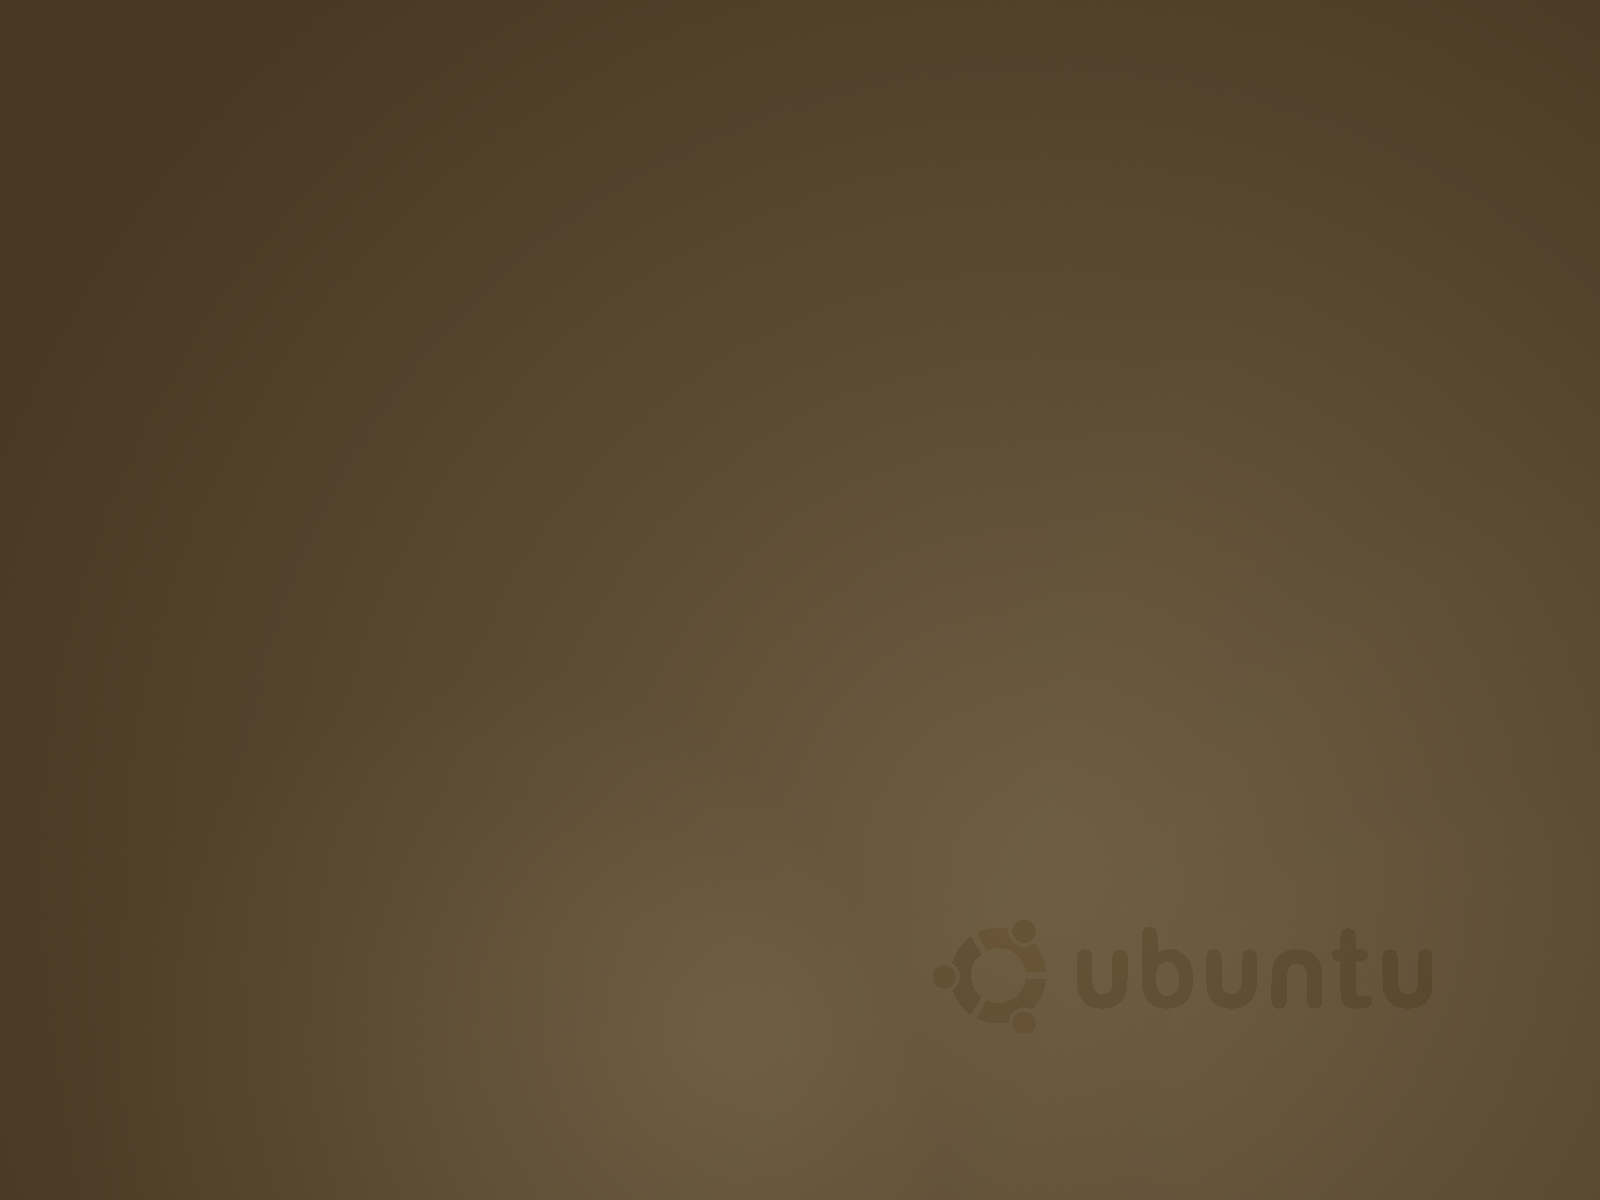 Ubuntu Wallpaper Kyleabaker